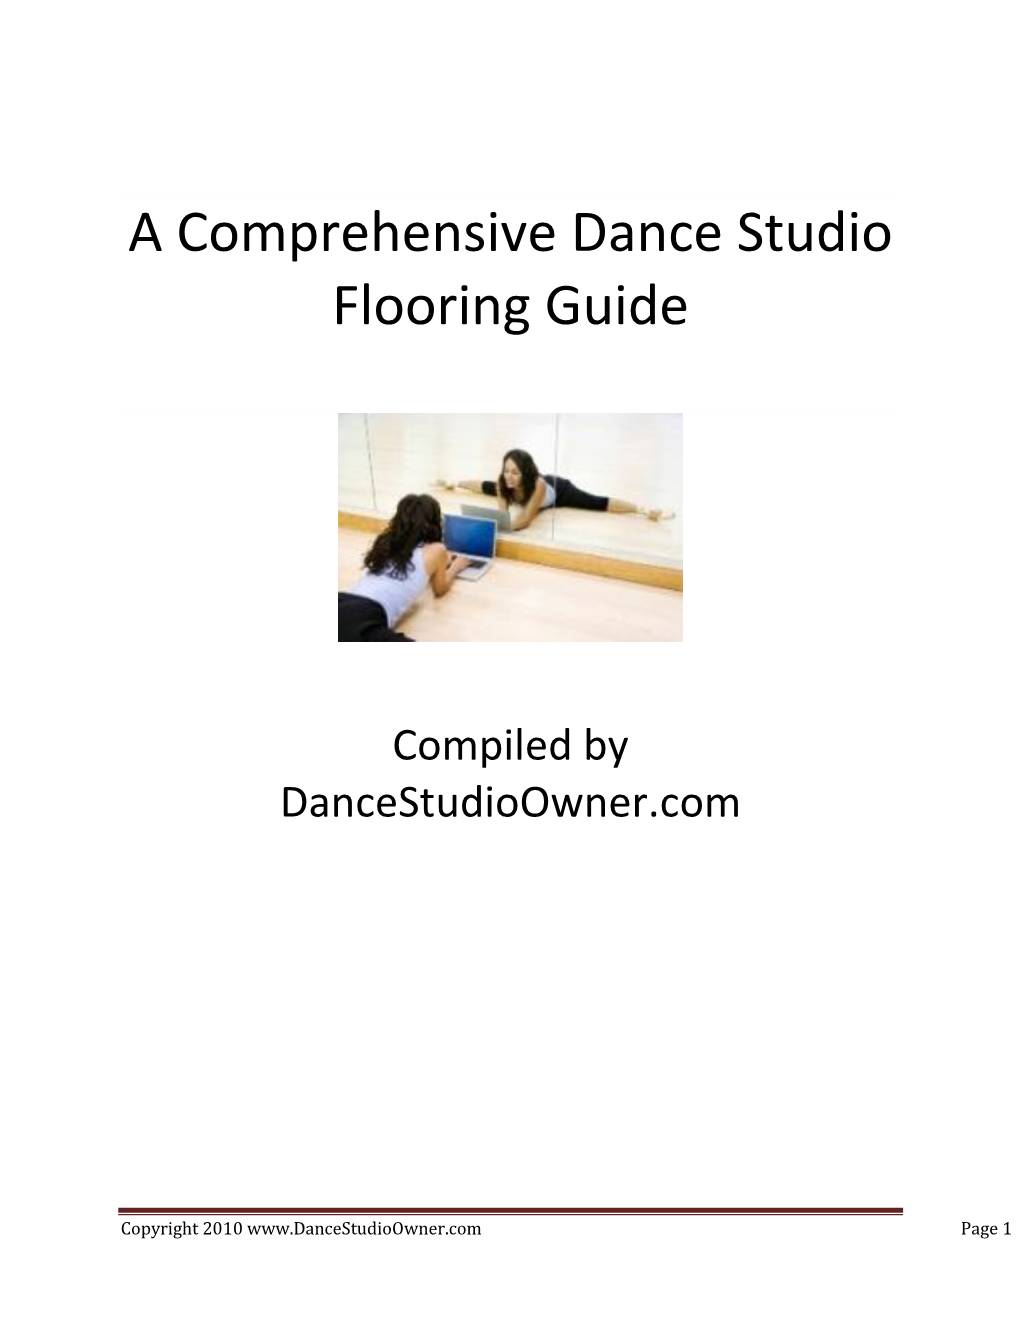 A Comprehensive Dance Studio Flooring Guide